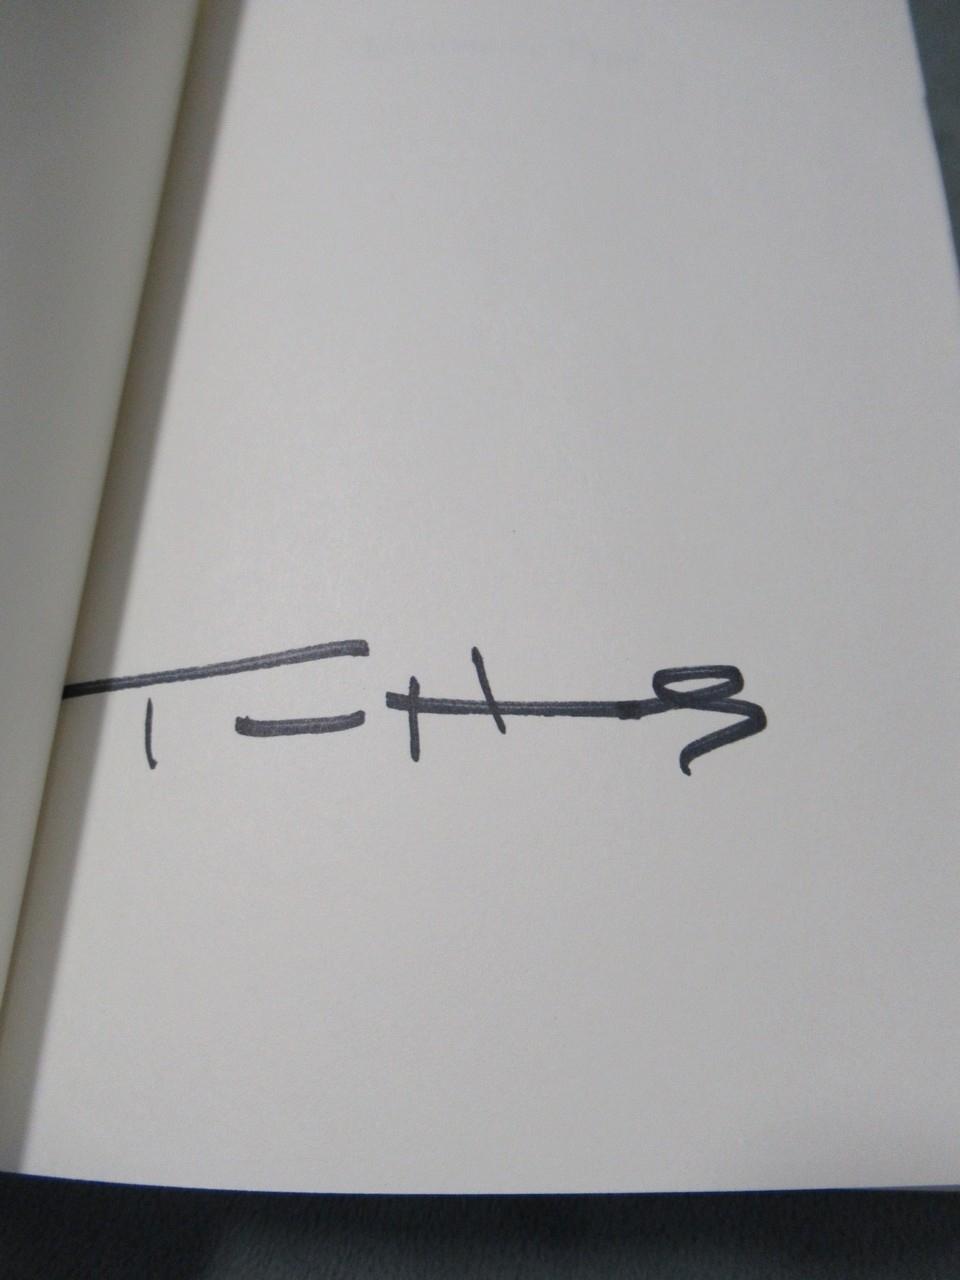 Tom Hanks/Uncommon Type Signed Book